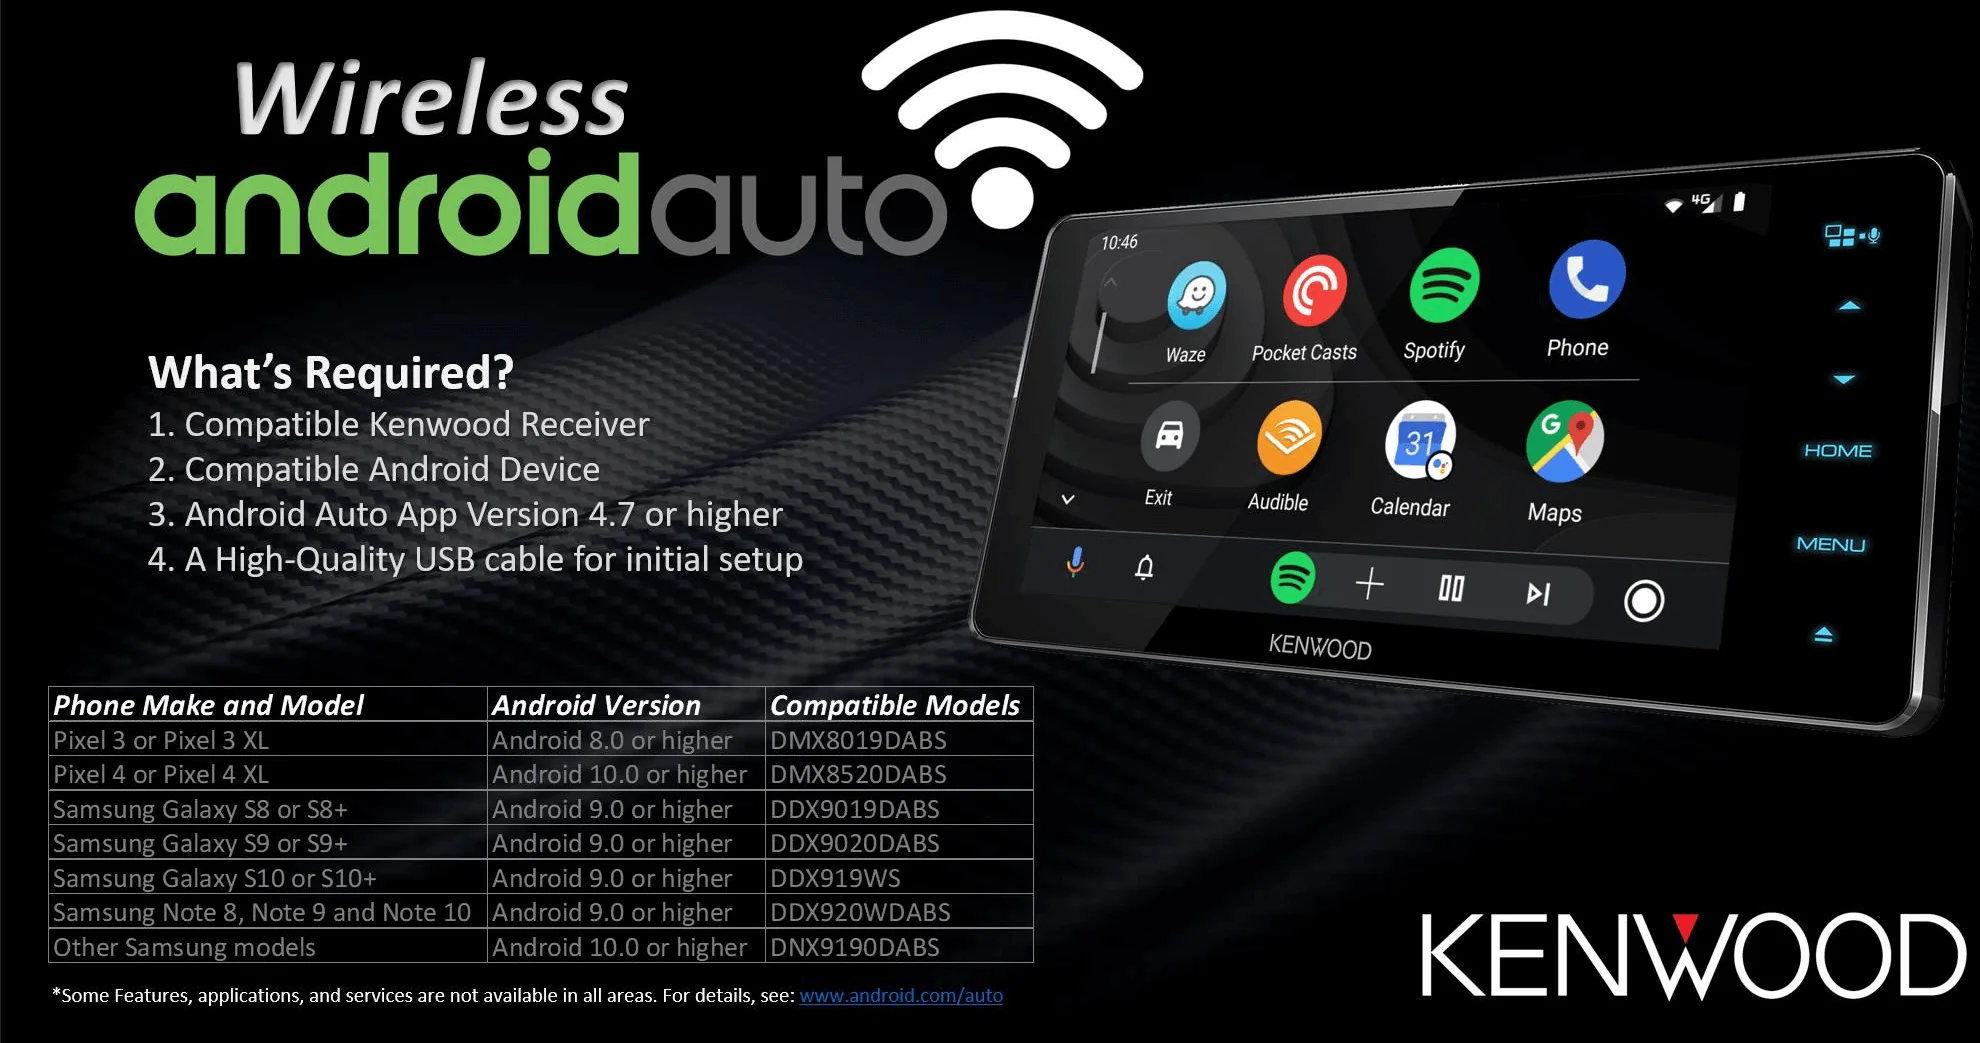 Kenwood wireless androidauto